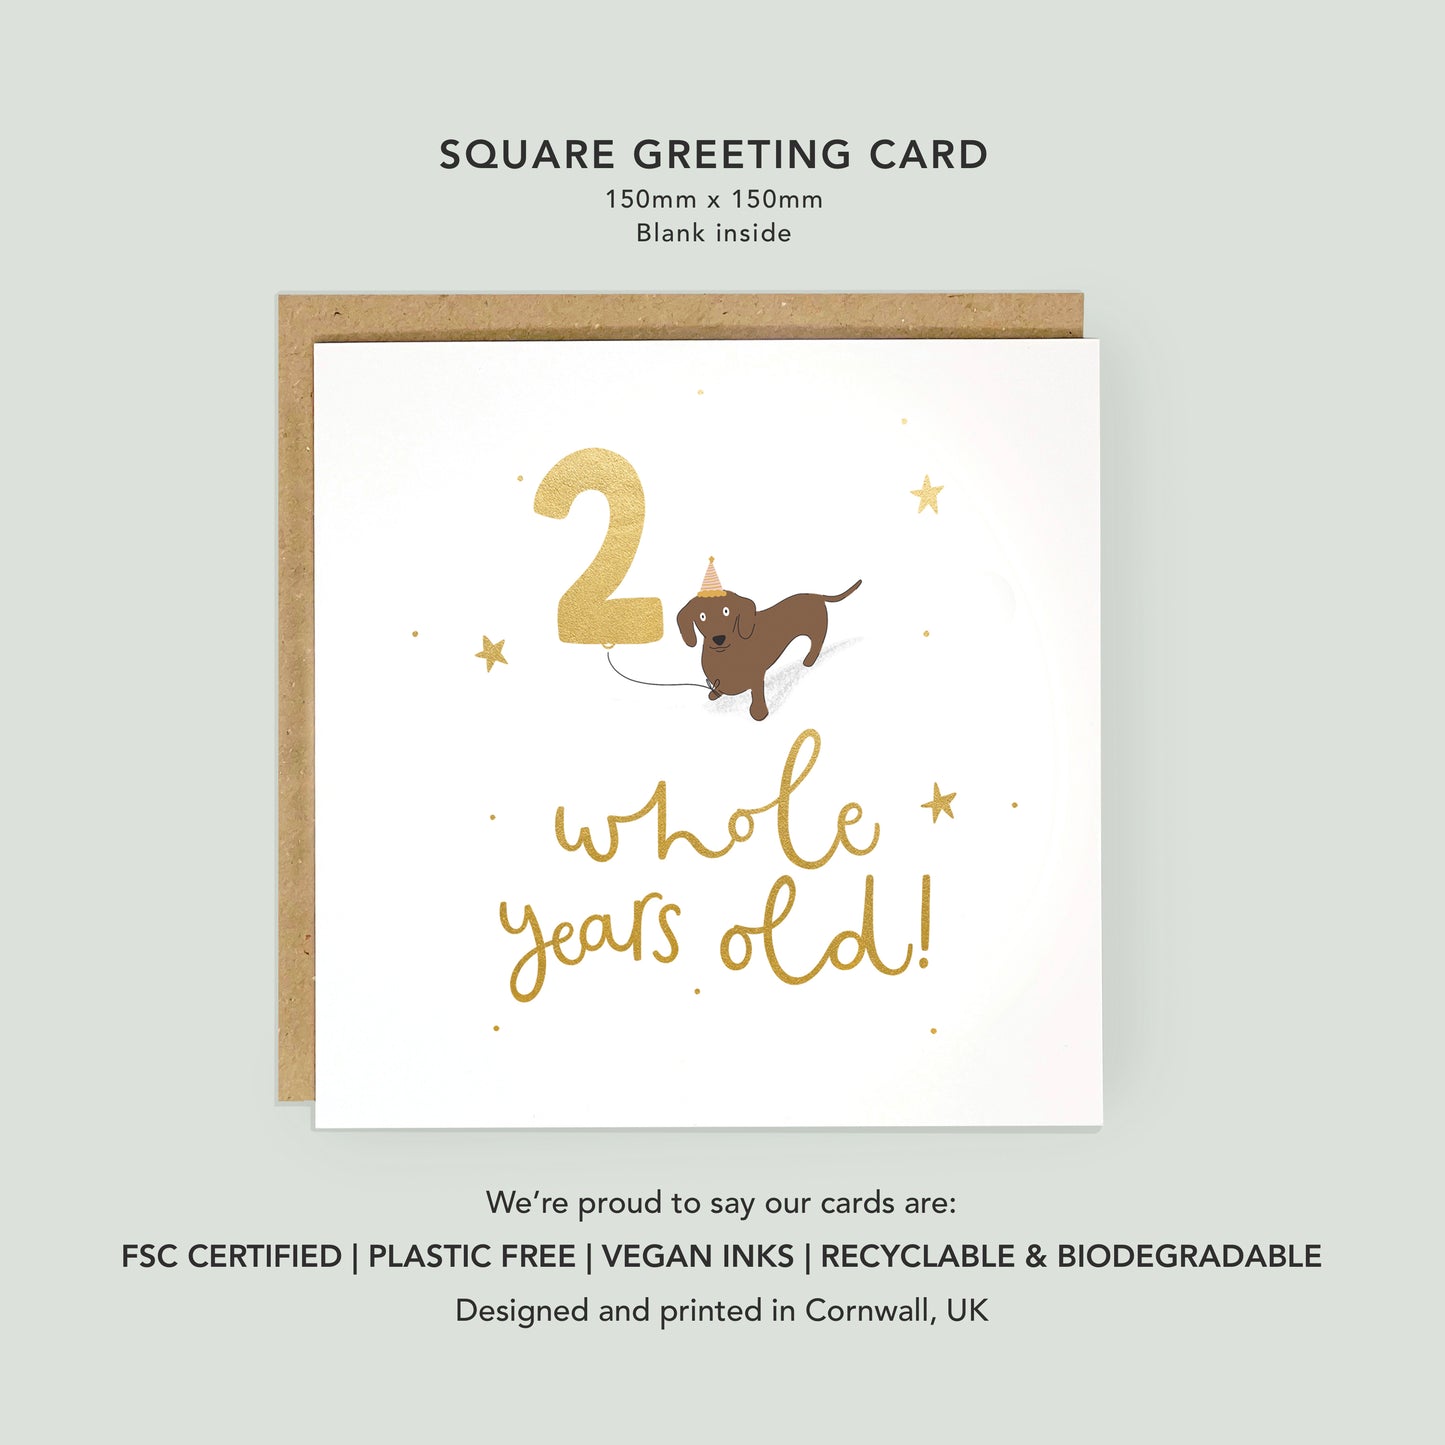 Gold foiled 2nd birthday dachshund dog card by Abbie Imagine